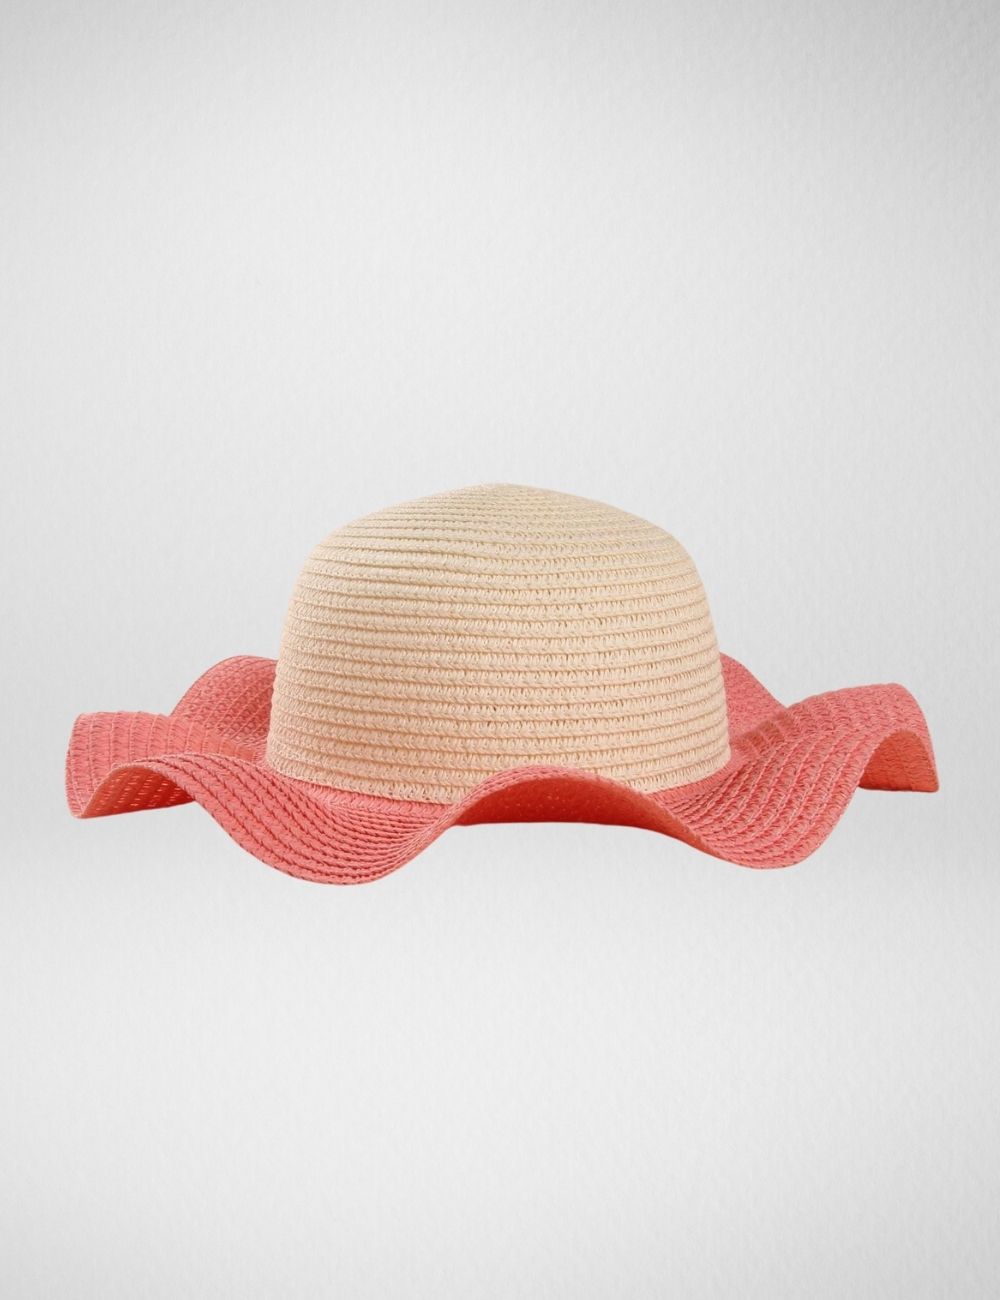 Stylish baby hats